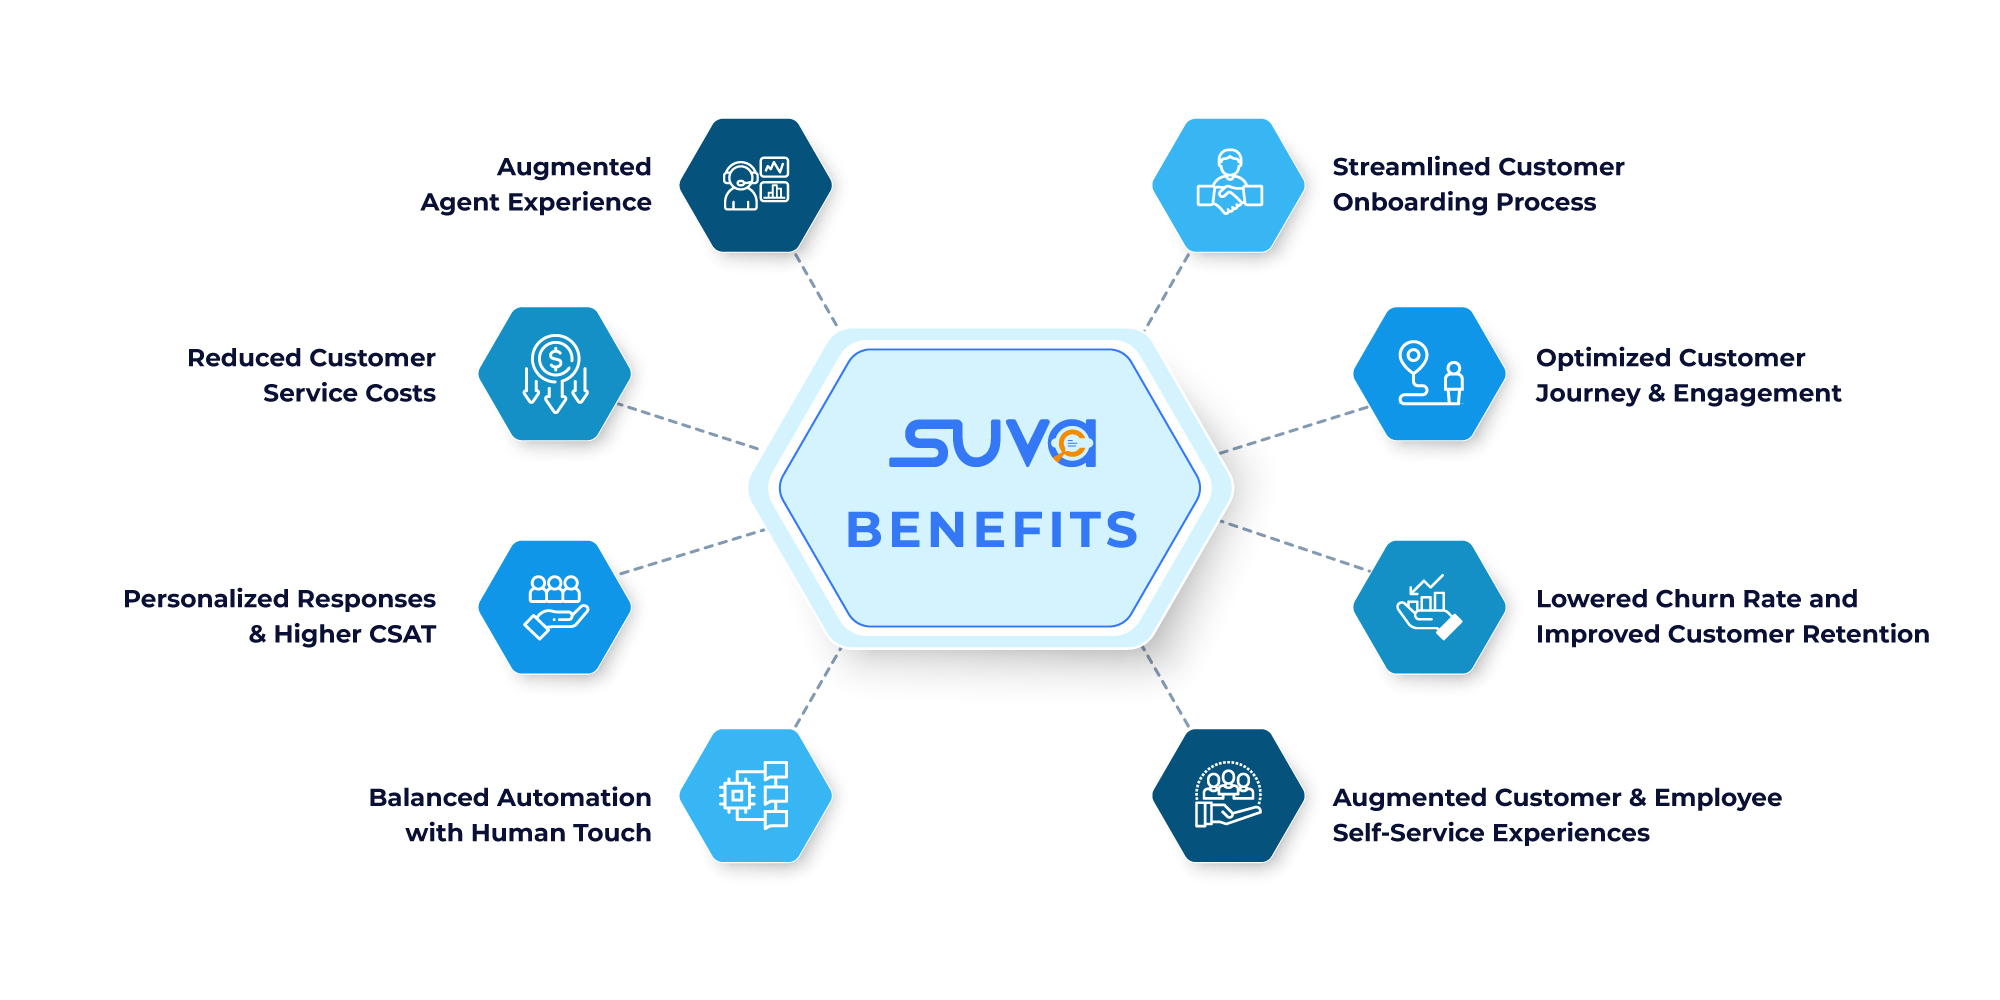 Benefits of SUVA